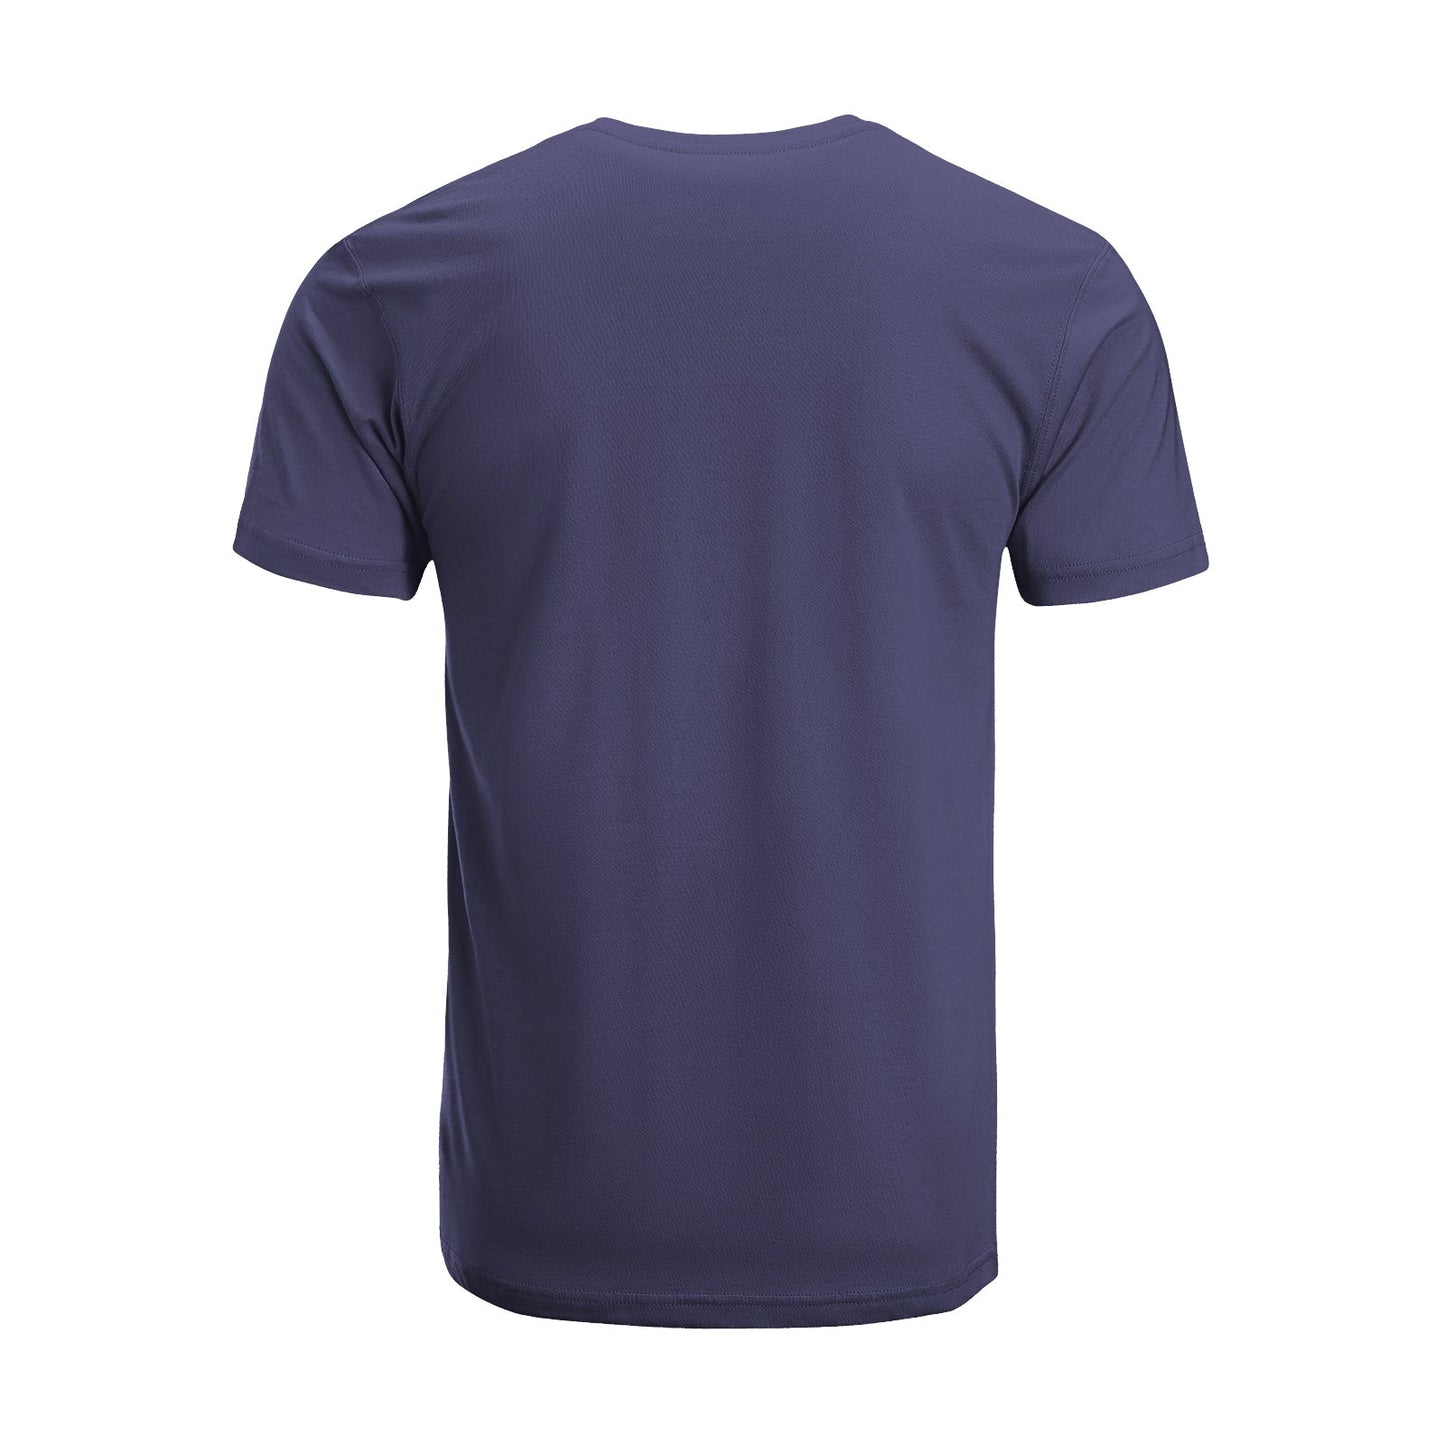 Unisex Short Sleeve Crew Neck Cotton Jersey T-Shirt MOM 21